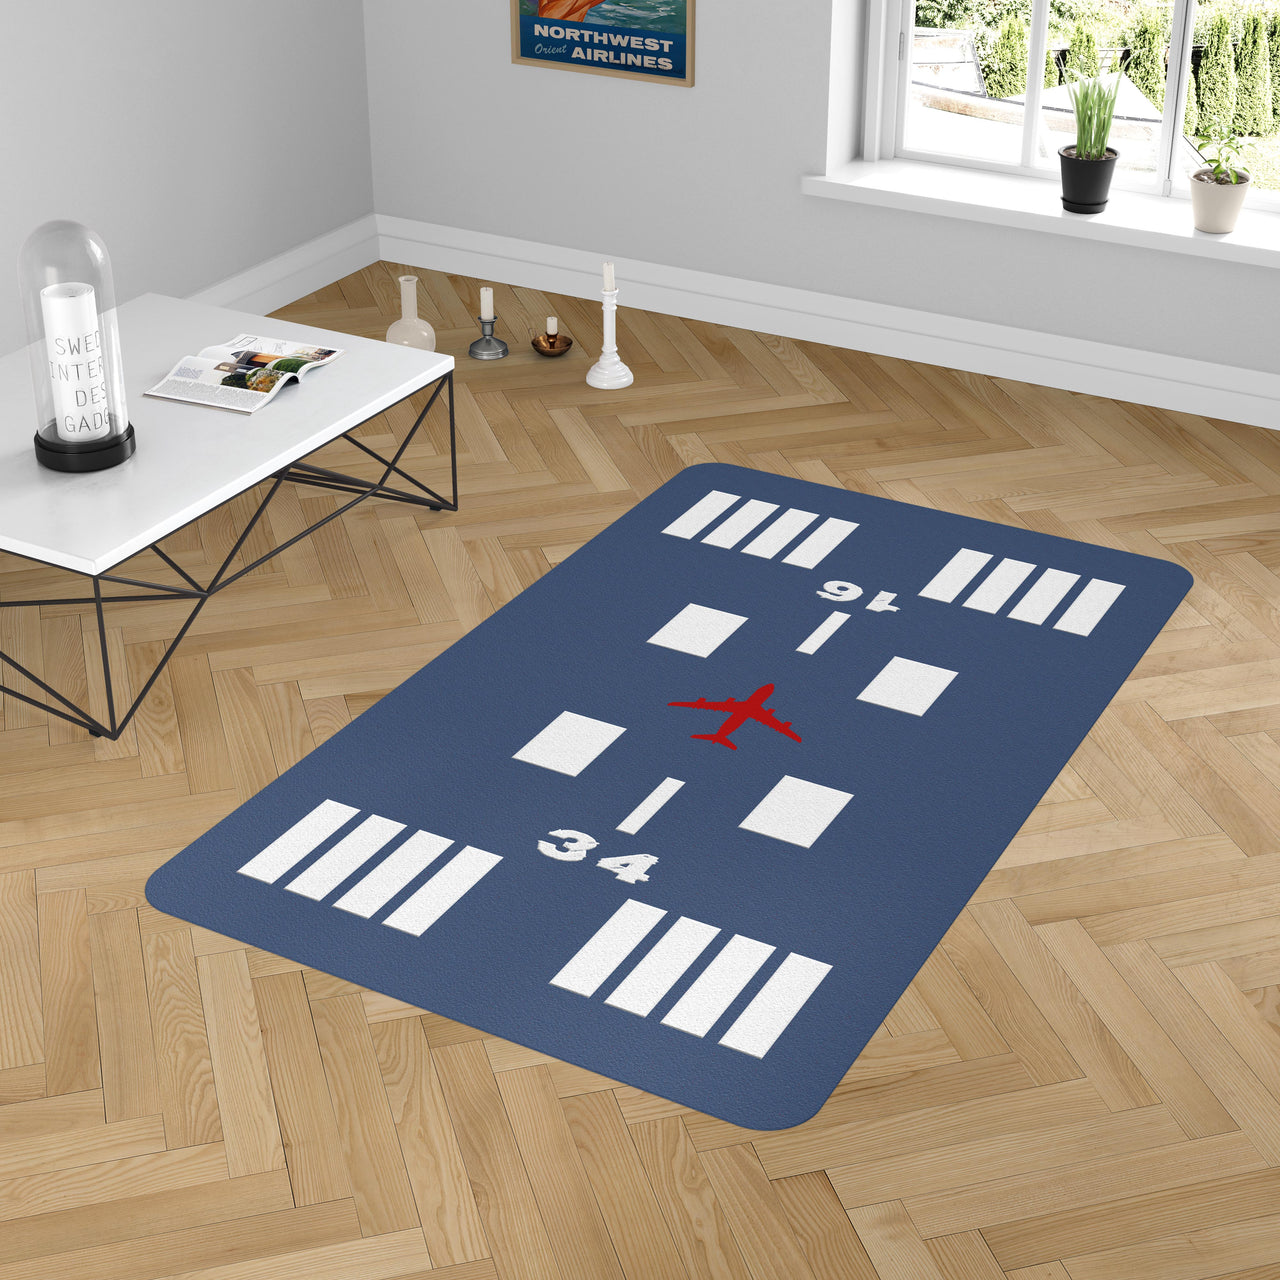 Special Runway (Blue) 34-16 Designed Carpet & Floor Mats